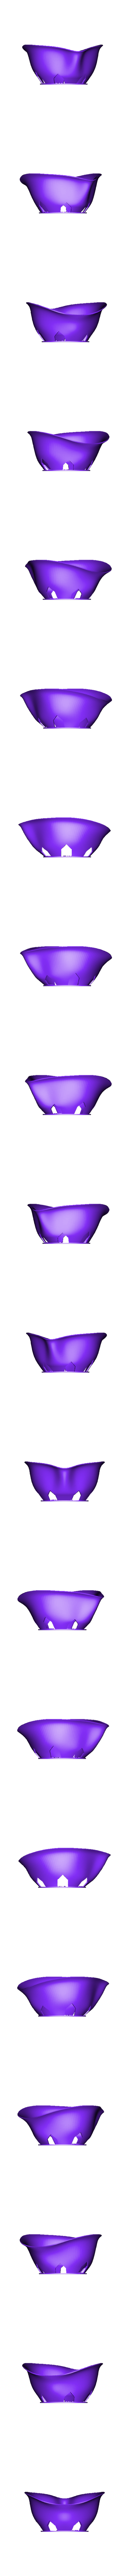 MaskBody-V11B.stl Download STL file Hopio dust mask v1.1 + v1.2 • Model to 3D print, hopio